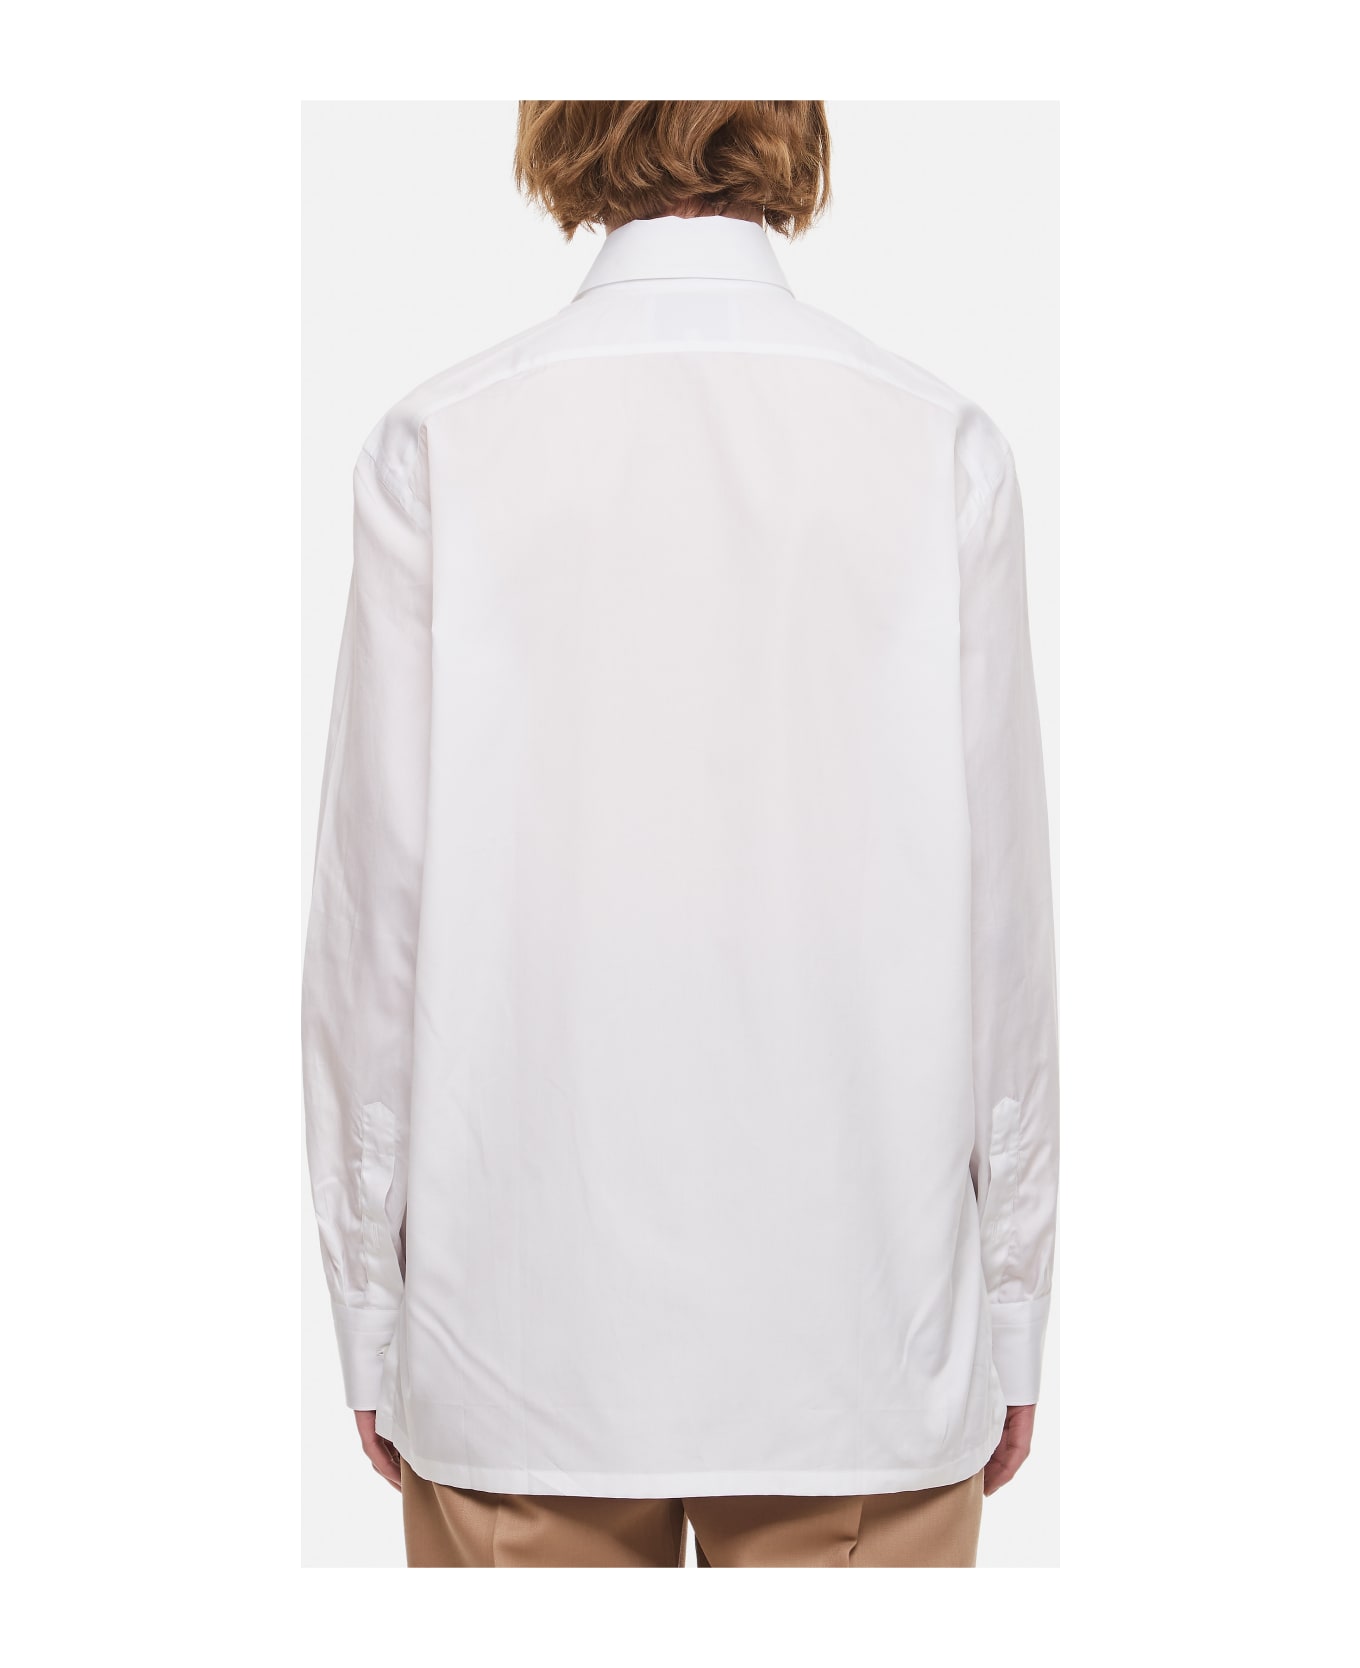 Setchu Origami Shirt - White シャツ